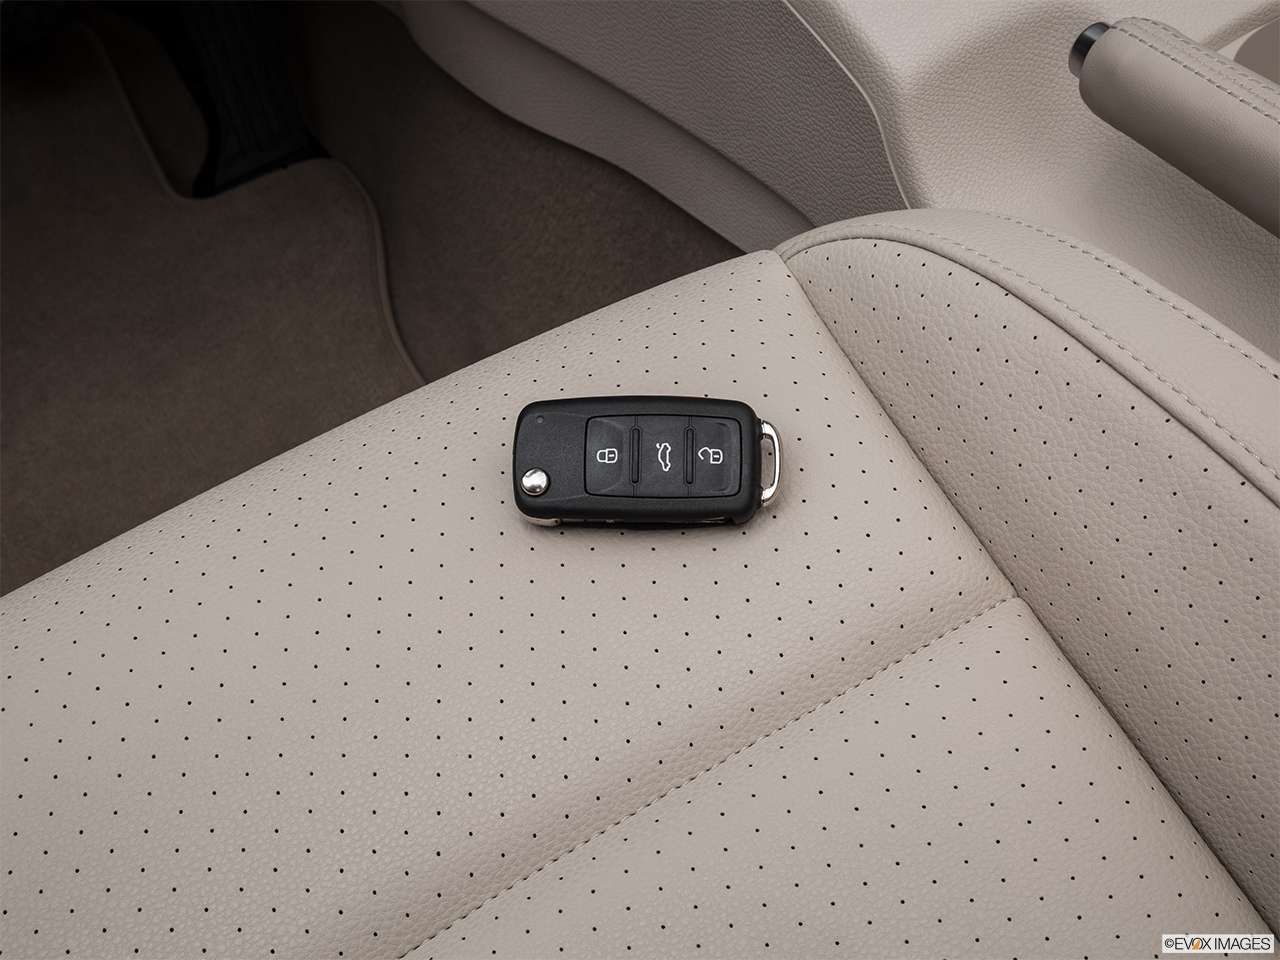 2016 Volkswagen Eos Komfort Edition Key fob on driver's seat. 